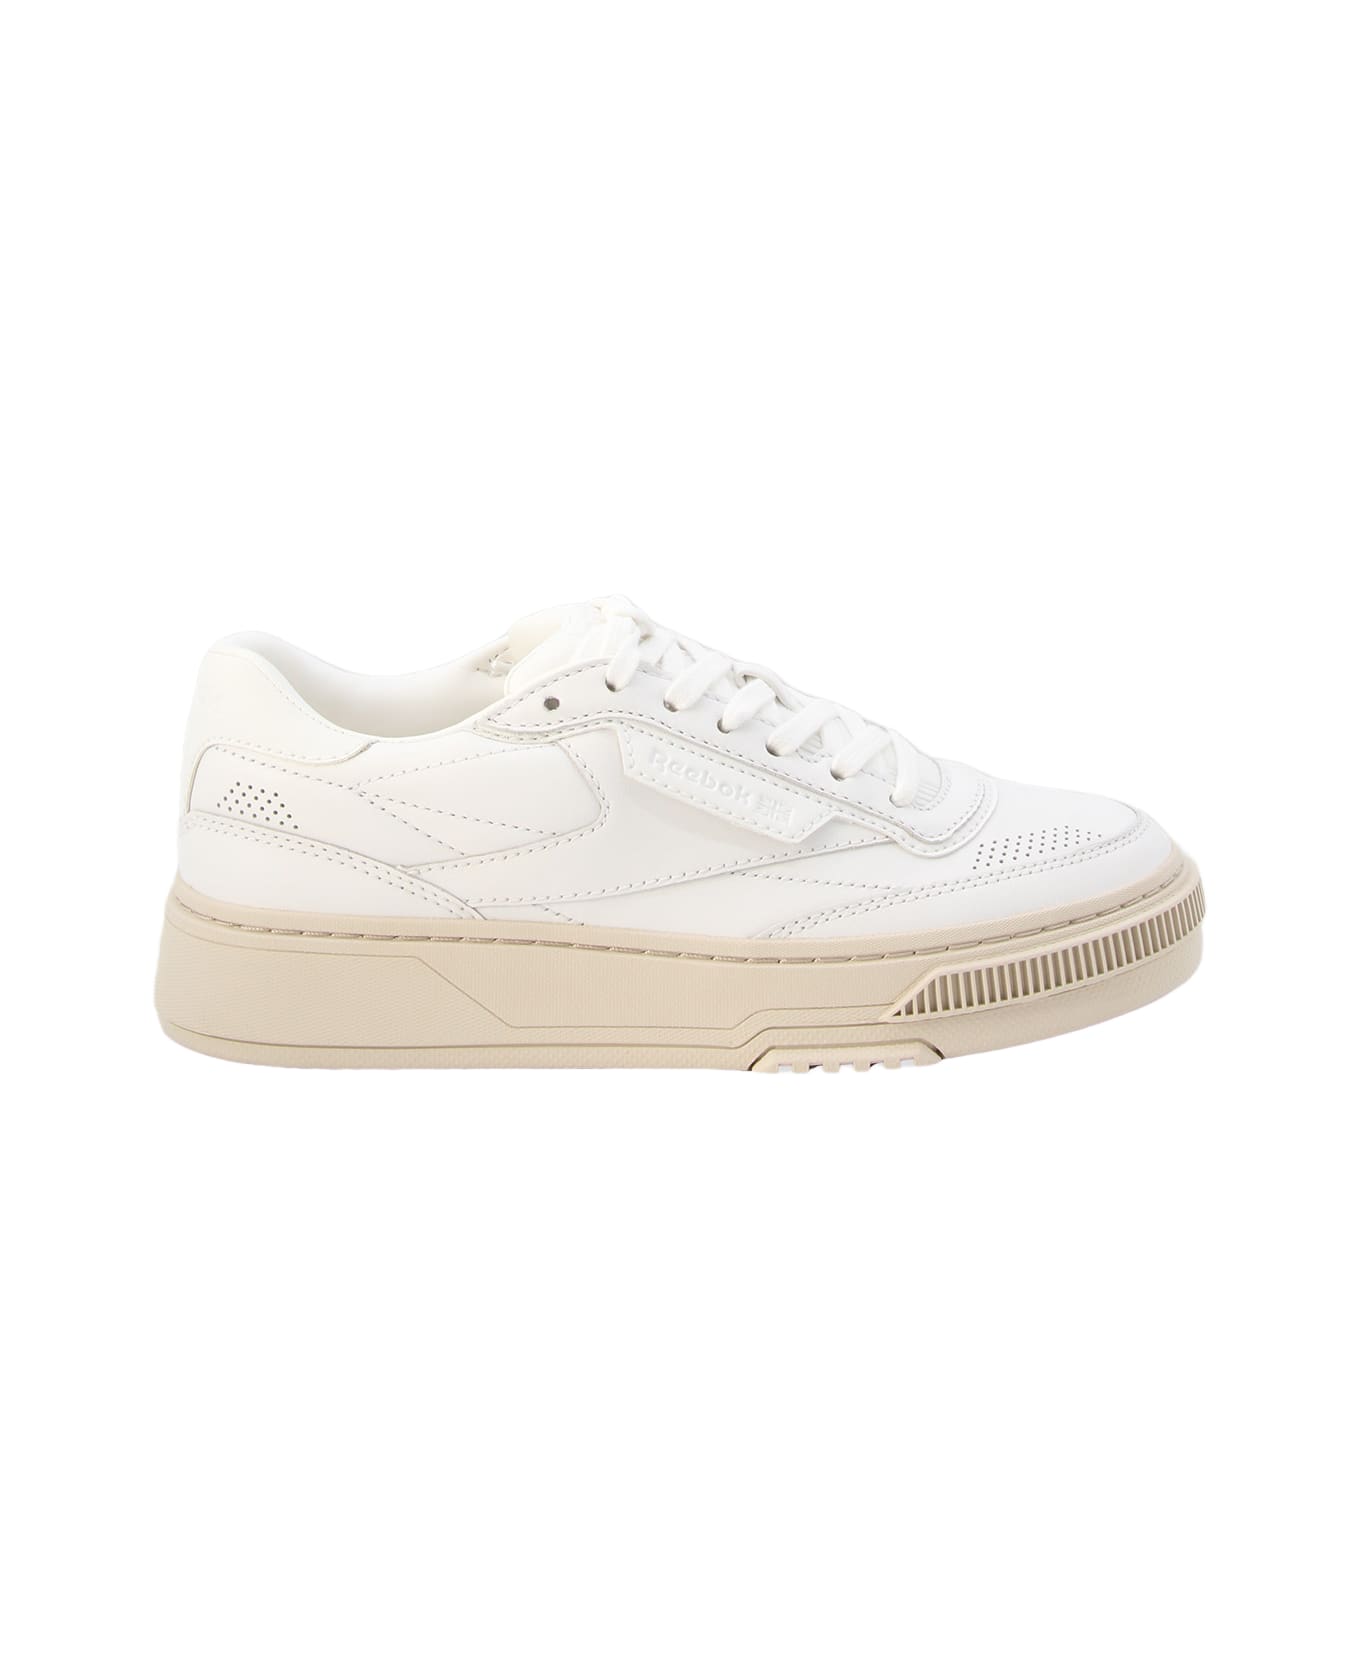 Reebok White Leather C Ltd Sneakers - White スニーカー